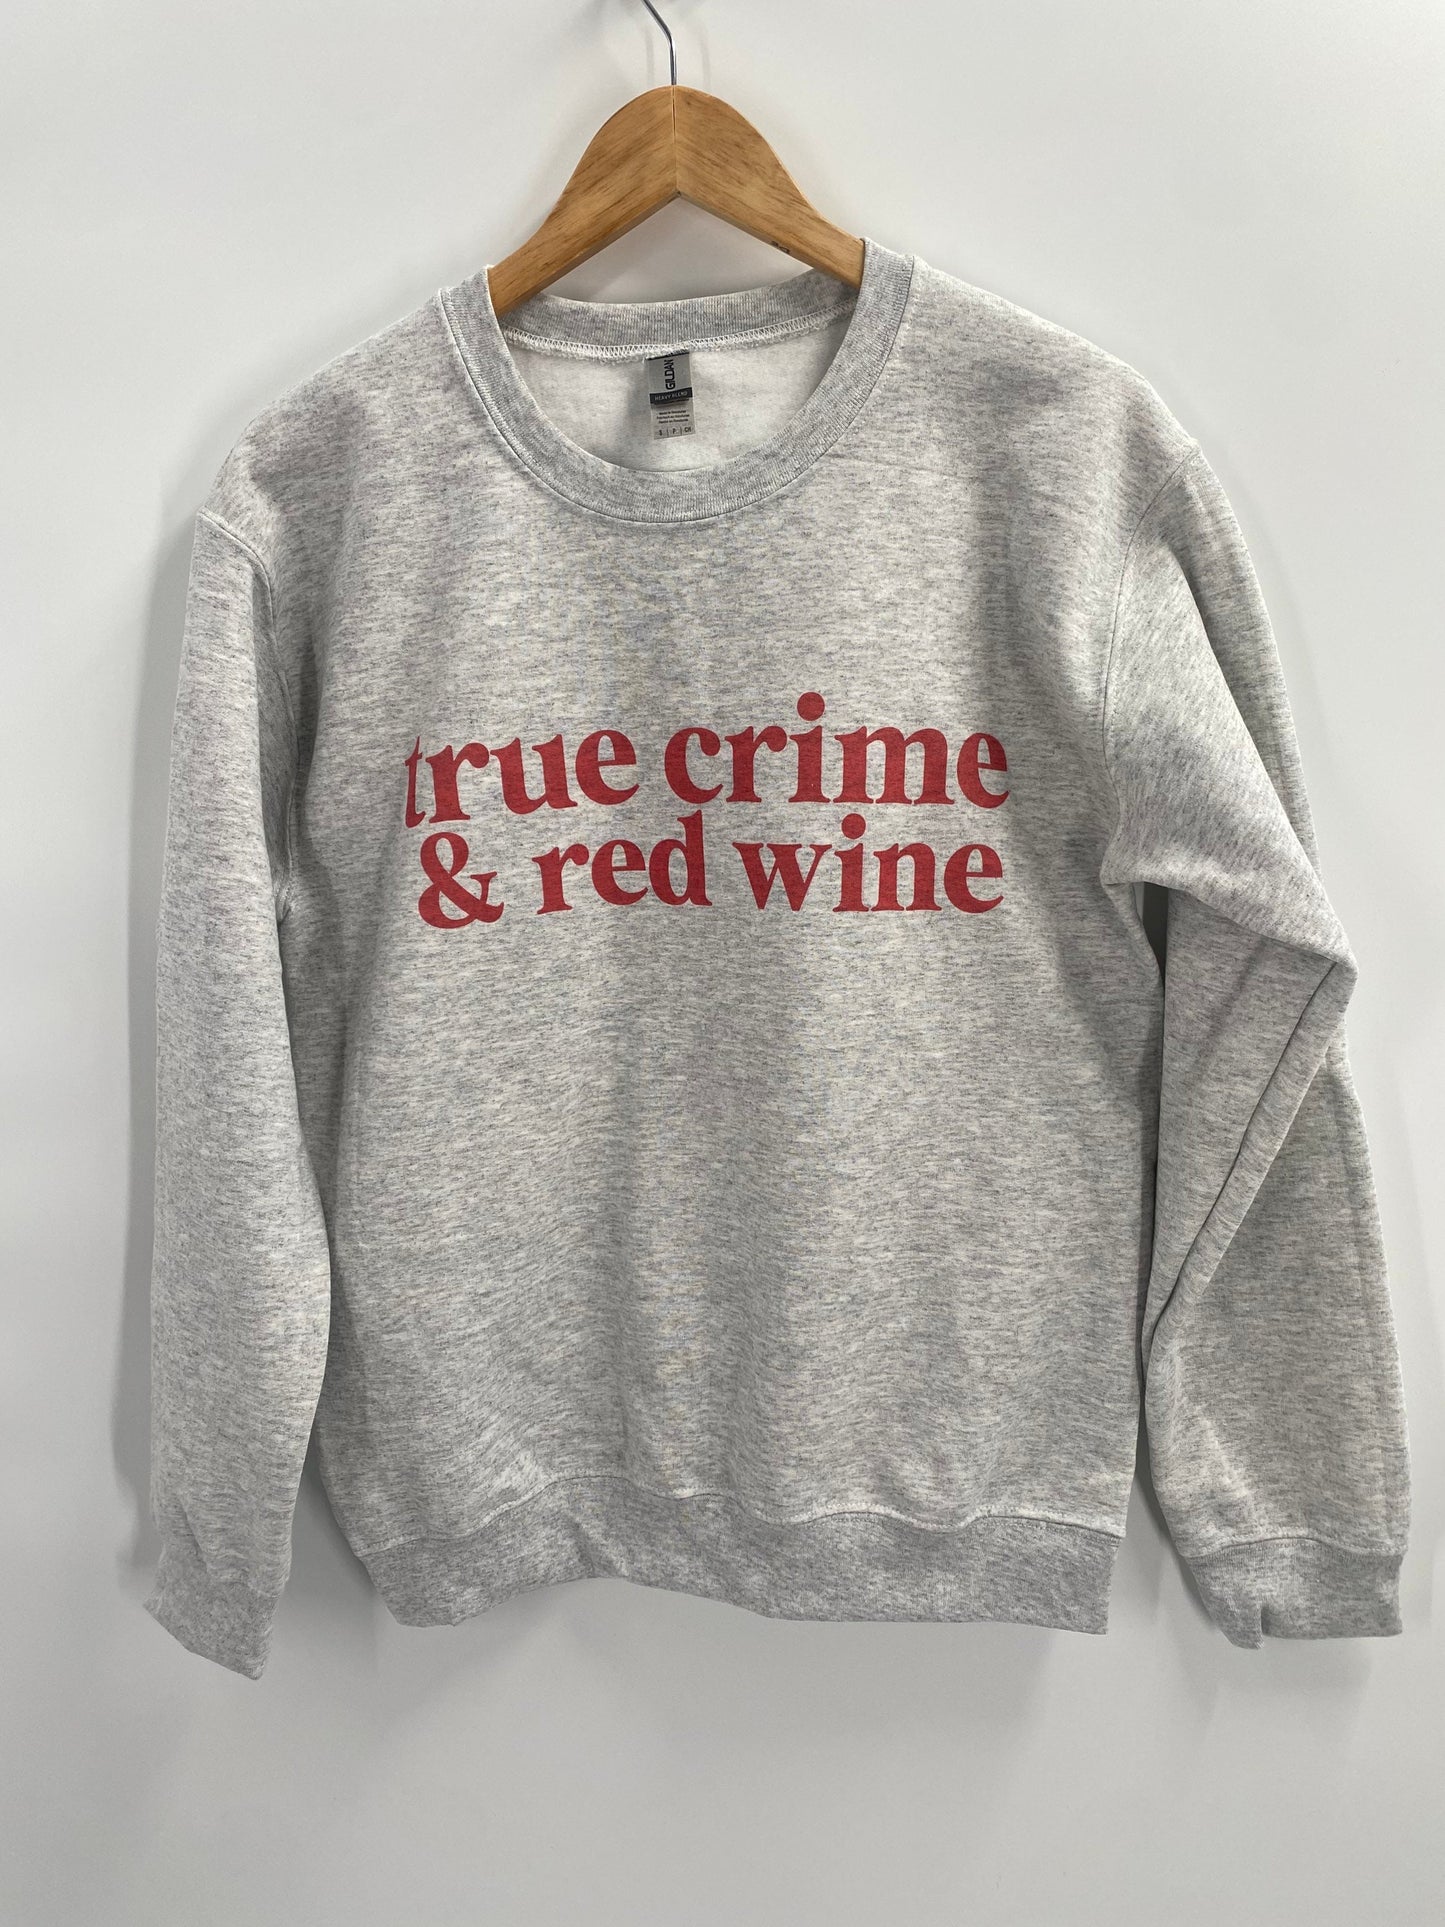 True Crime and Red wine sweatshirt